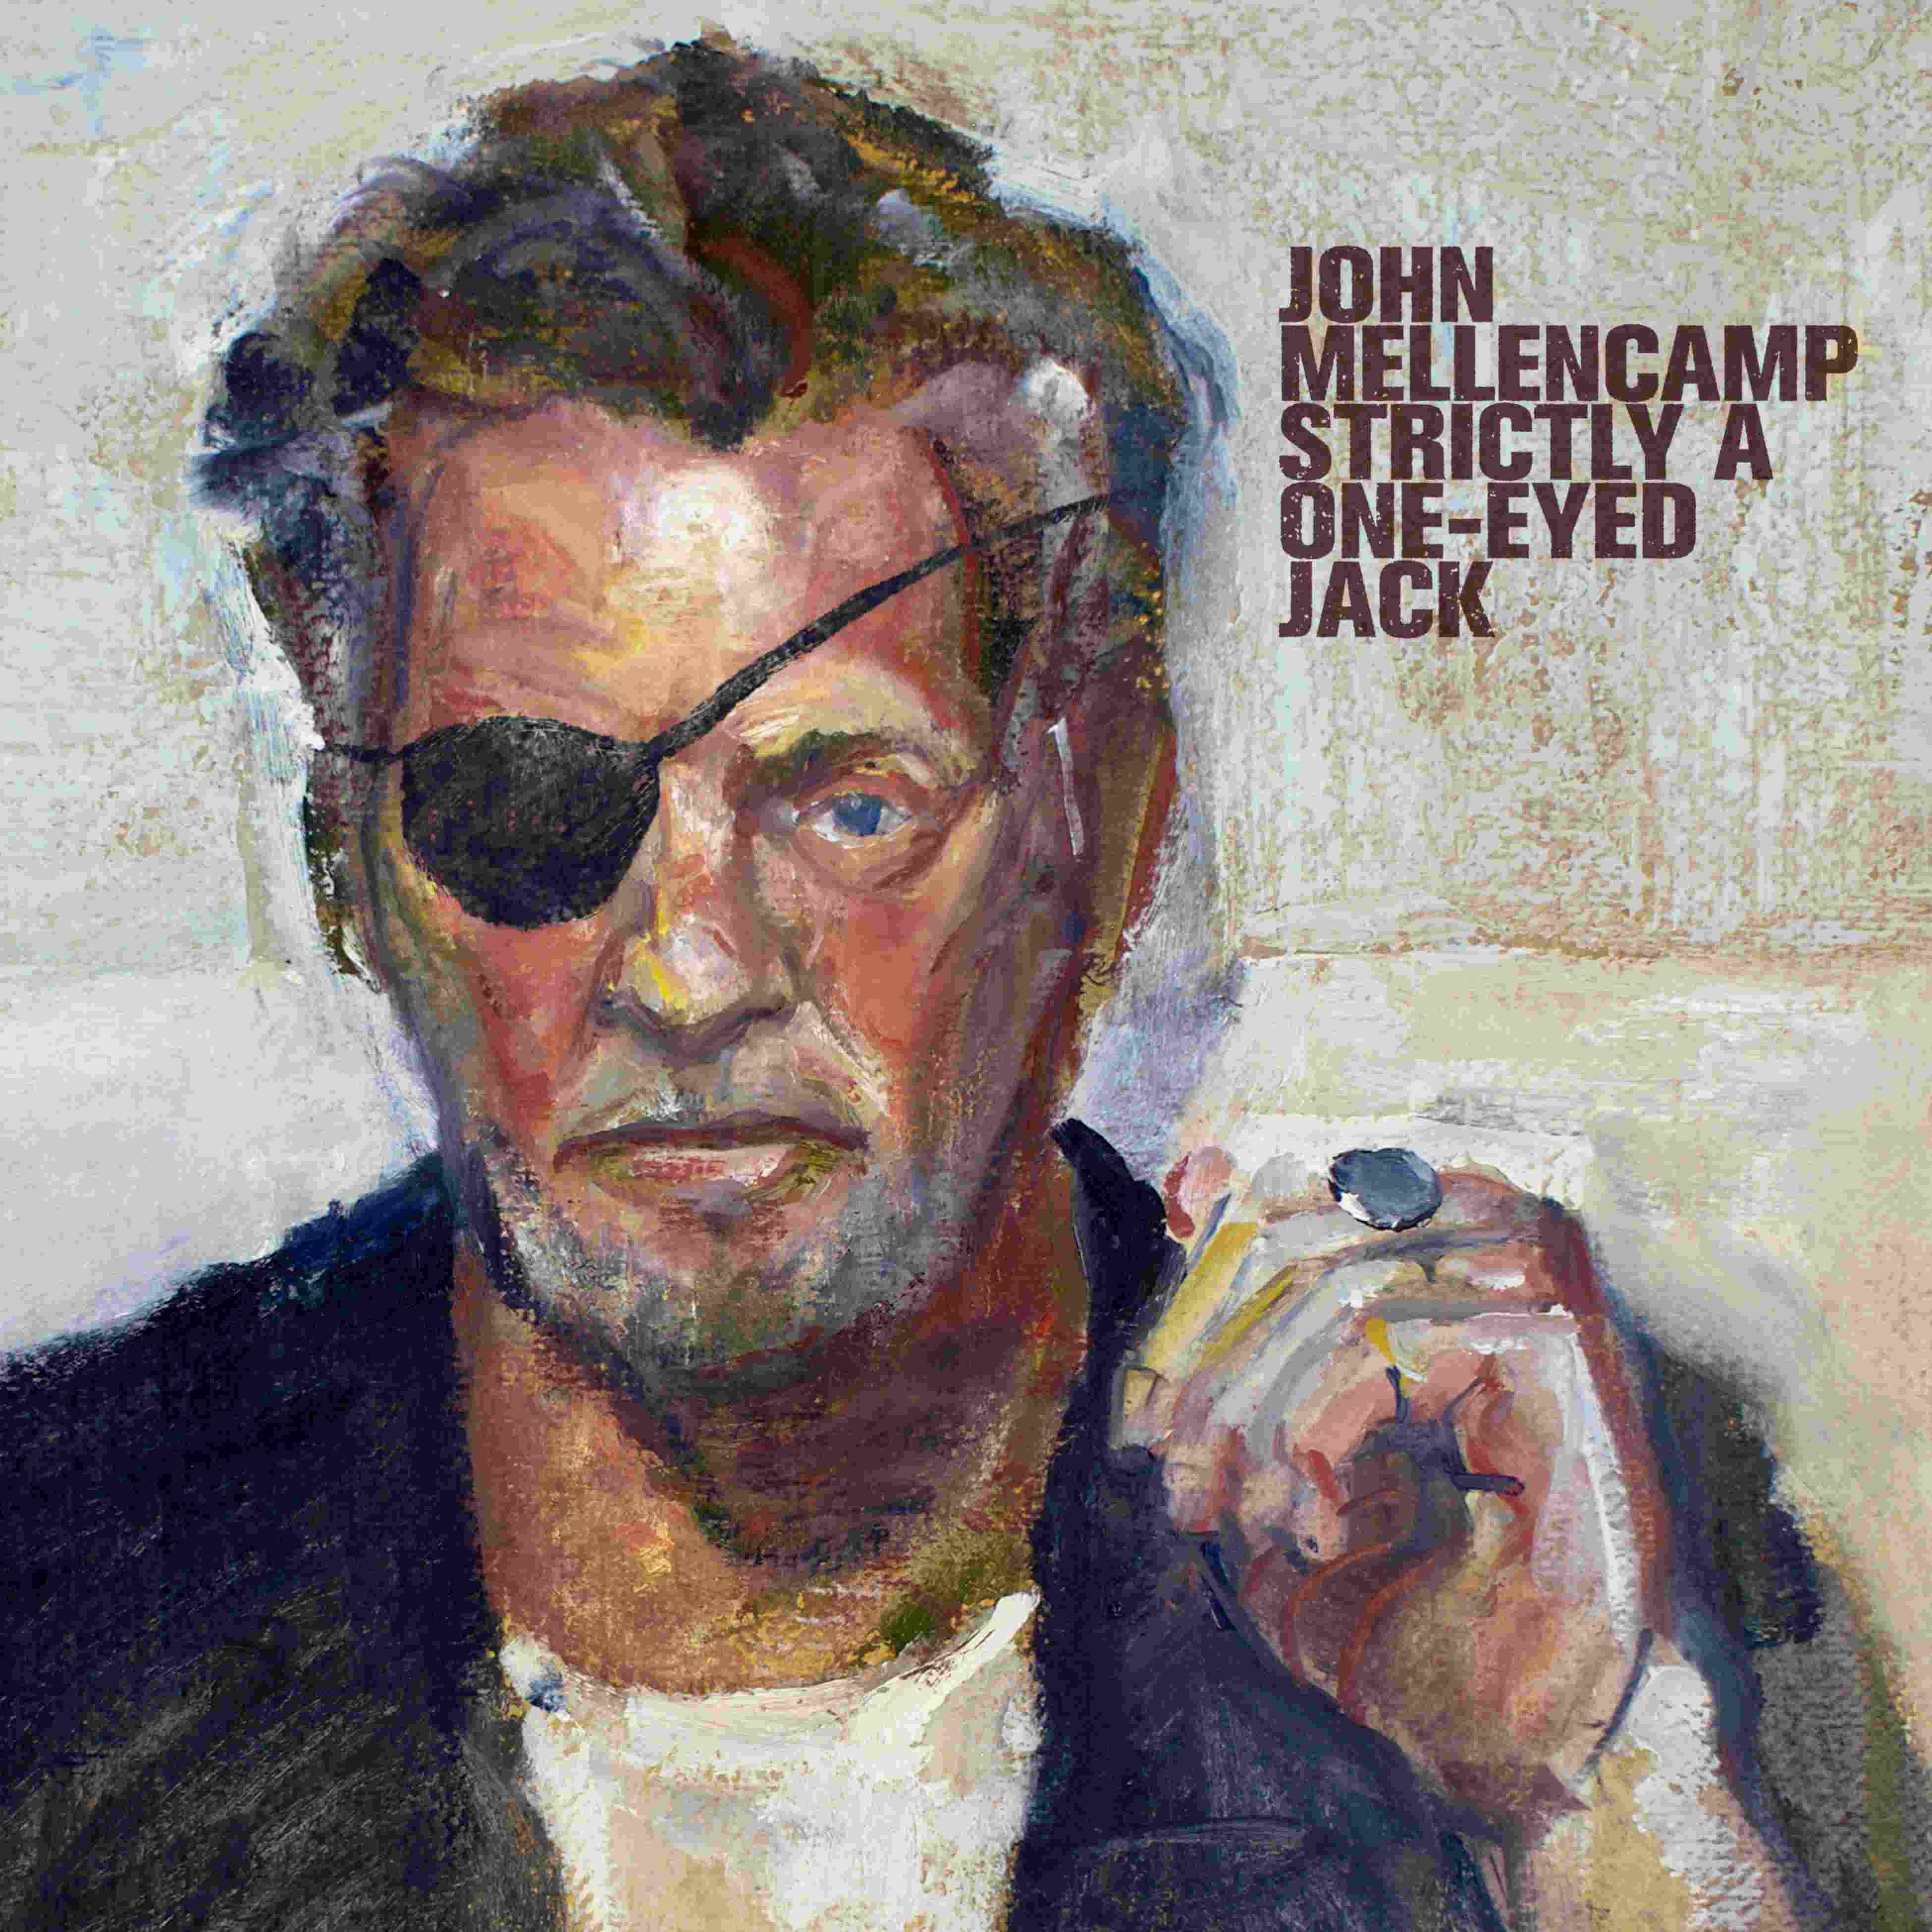 John Mellencamp - A - One-Eyed (CD) Strictly Jack